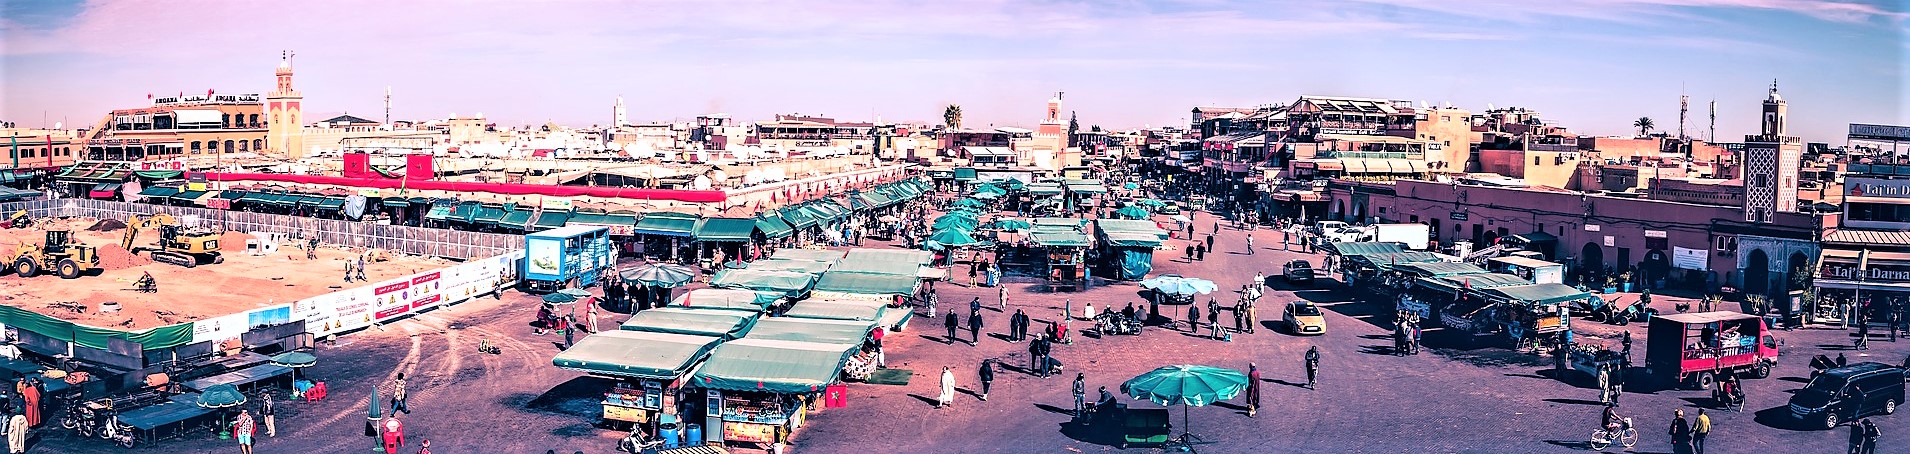 Marrakech|マラケシュ